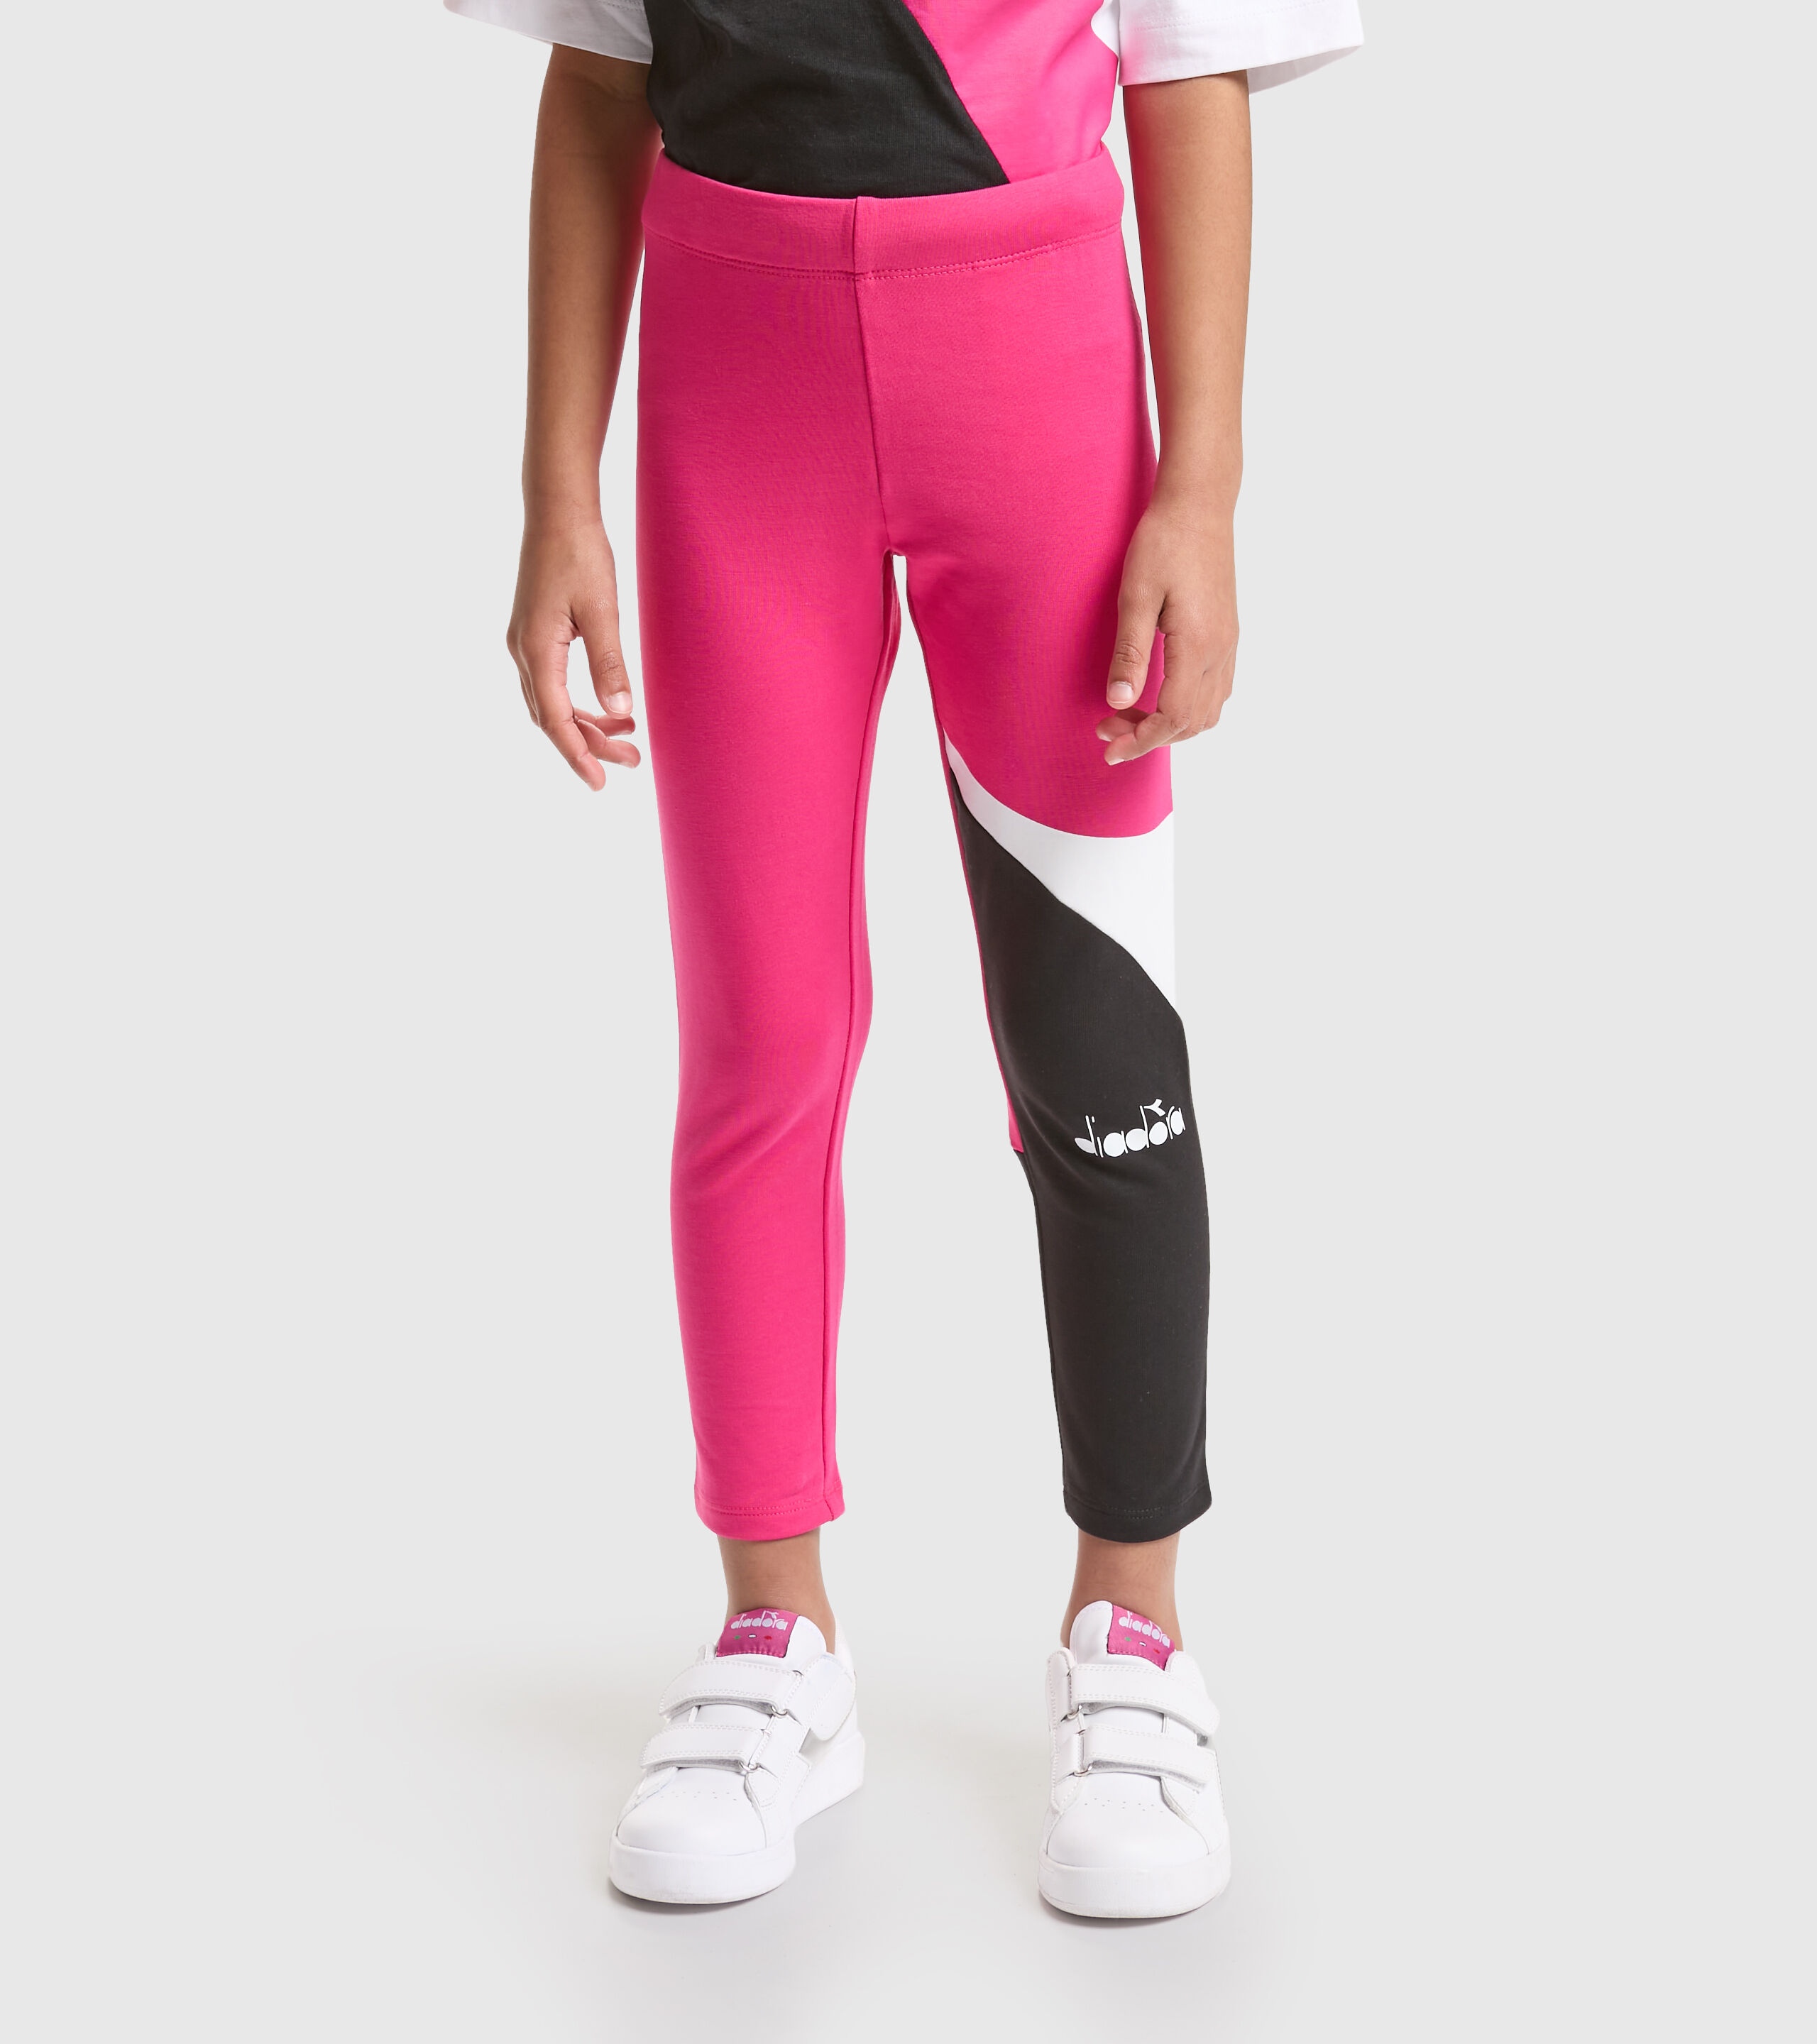 Women's Yoga Shorts Mini Cotton Short Pants Sport Fitness Gym Leggings  Casual US | eBay